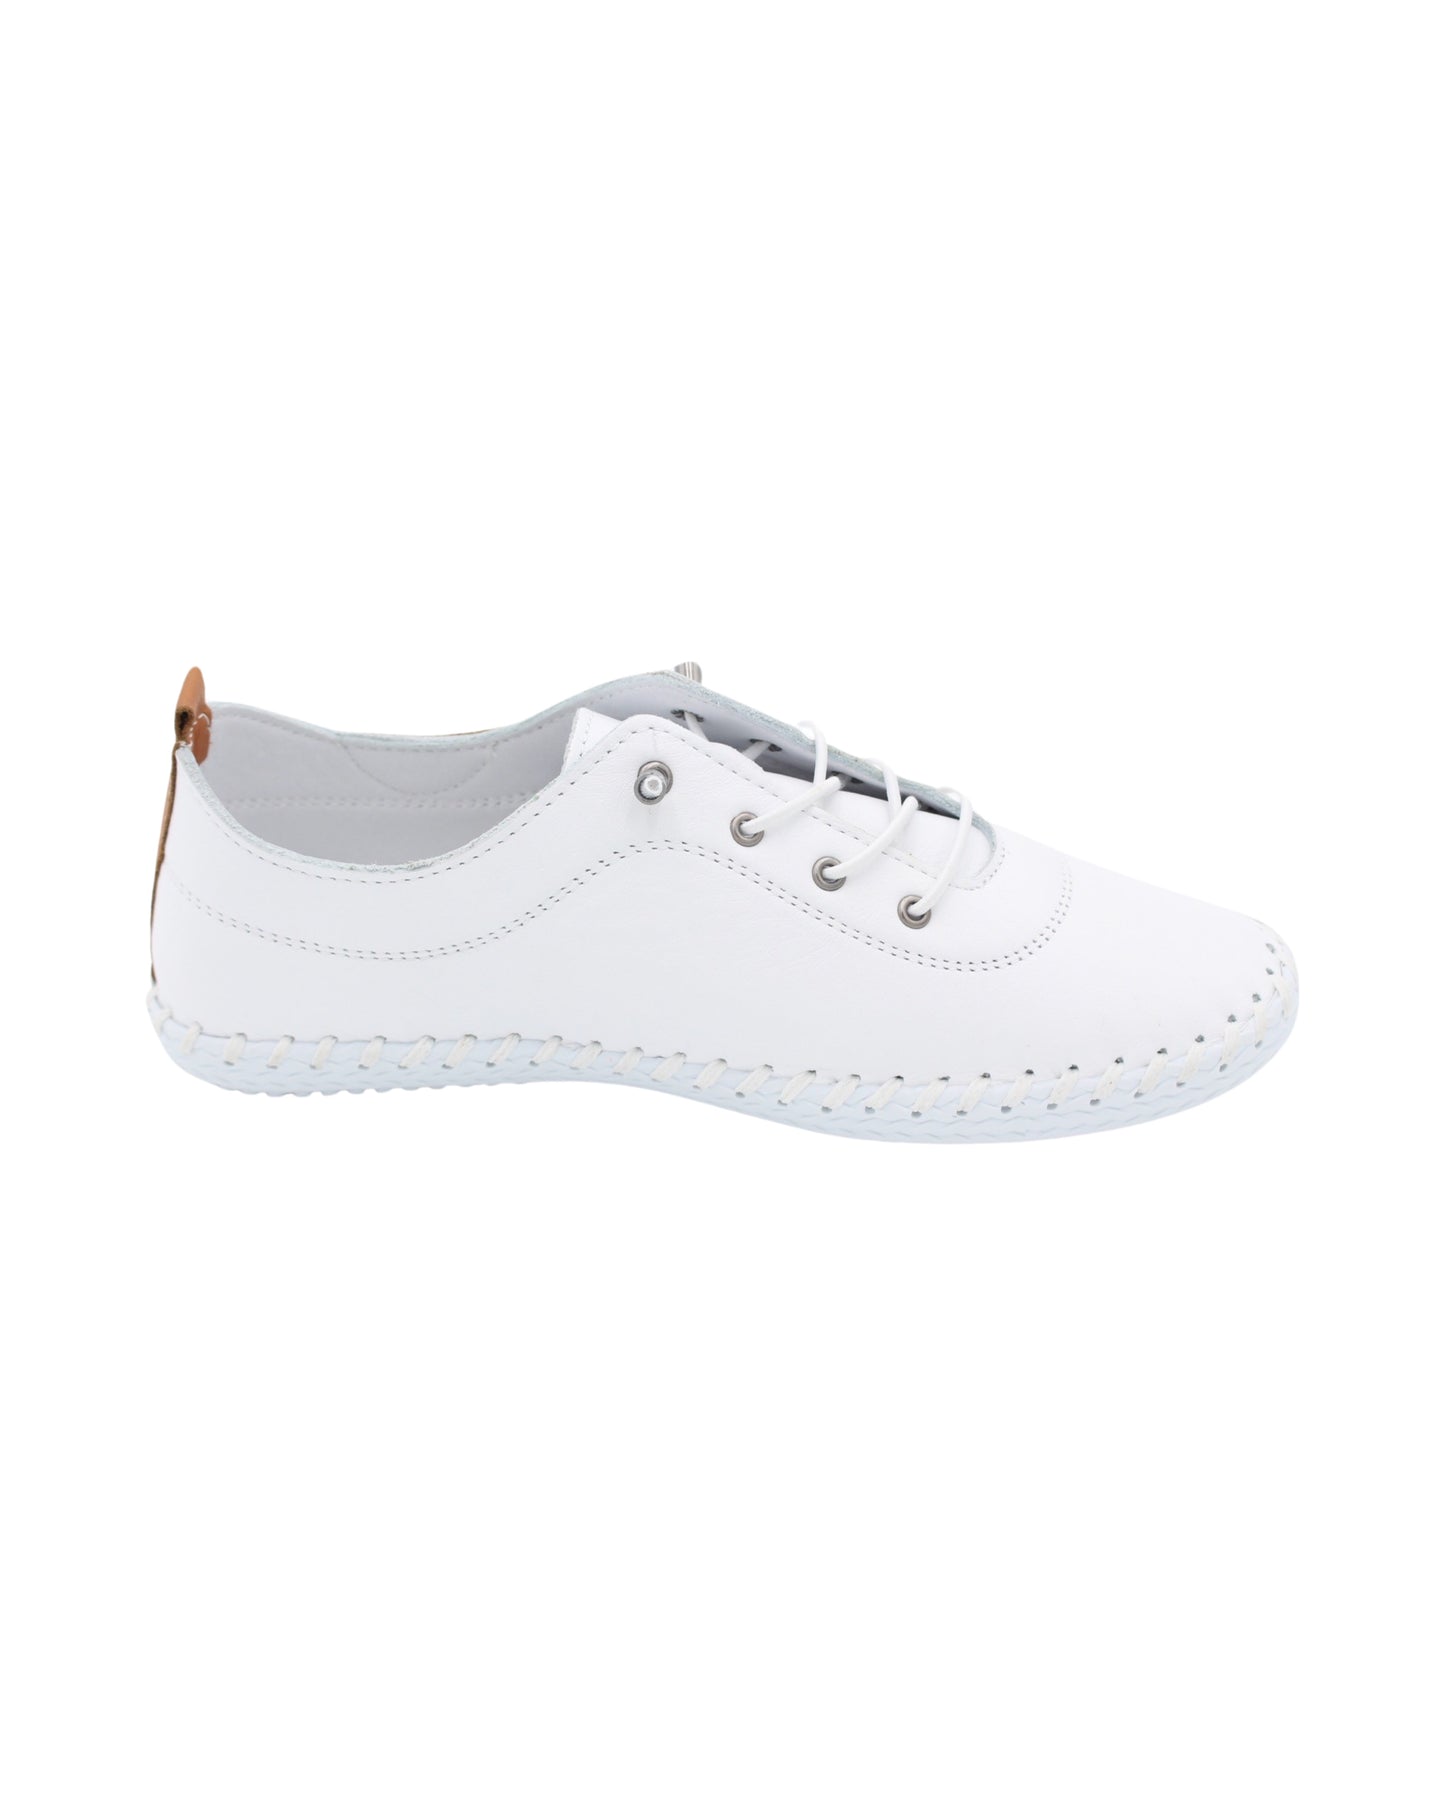 Lunar - Ladies Shoes Trainers White (1954)